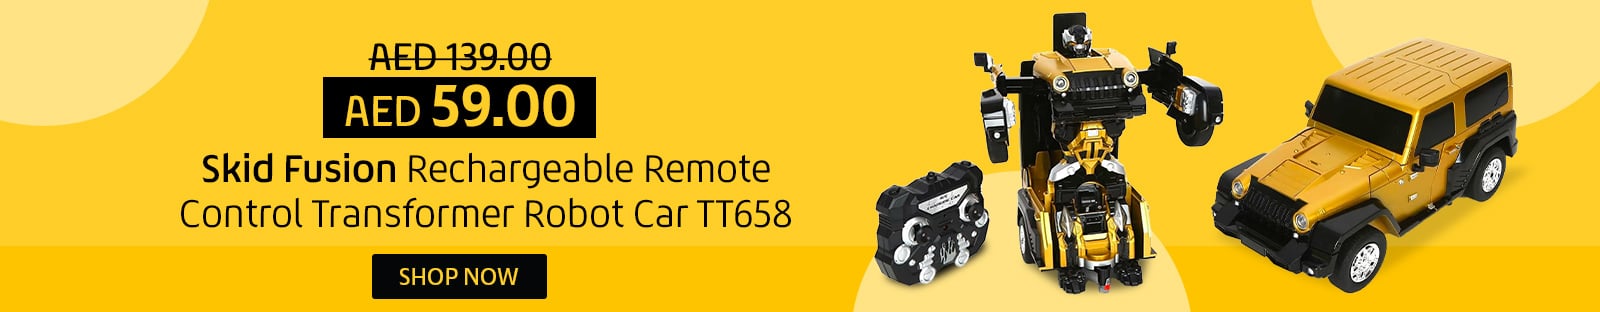 Skid-Fusion-Rechargeable-Remote_Control-Transformer-Robot-Car-TT658_1600x312.jpg